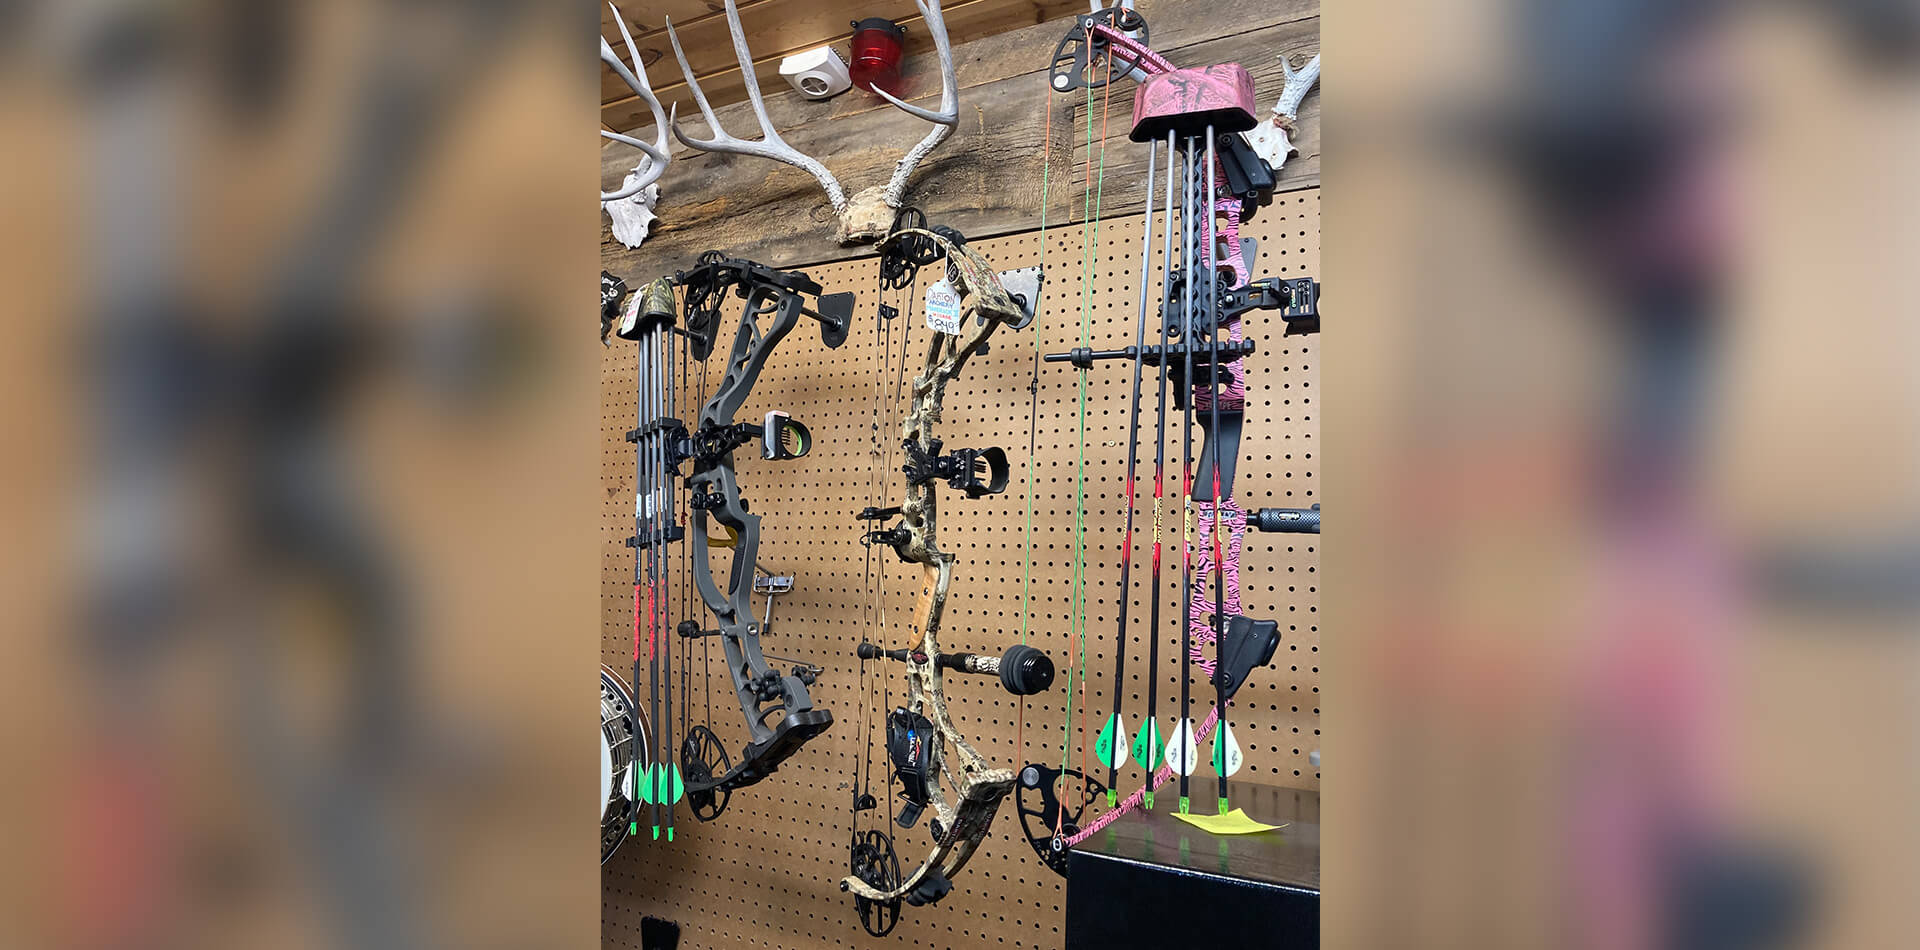 Archery Bows